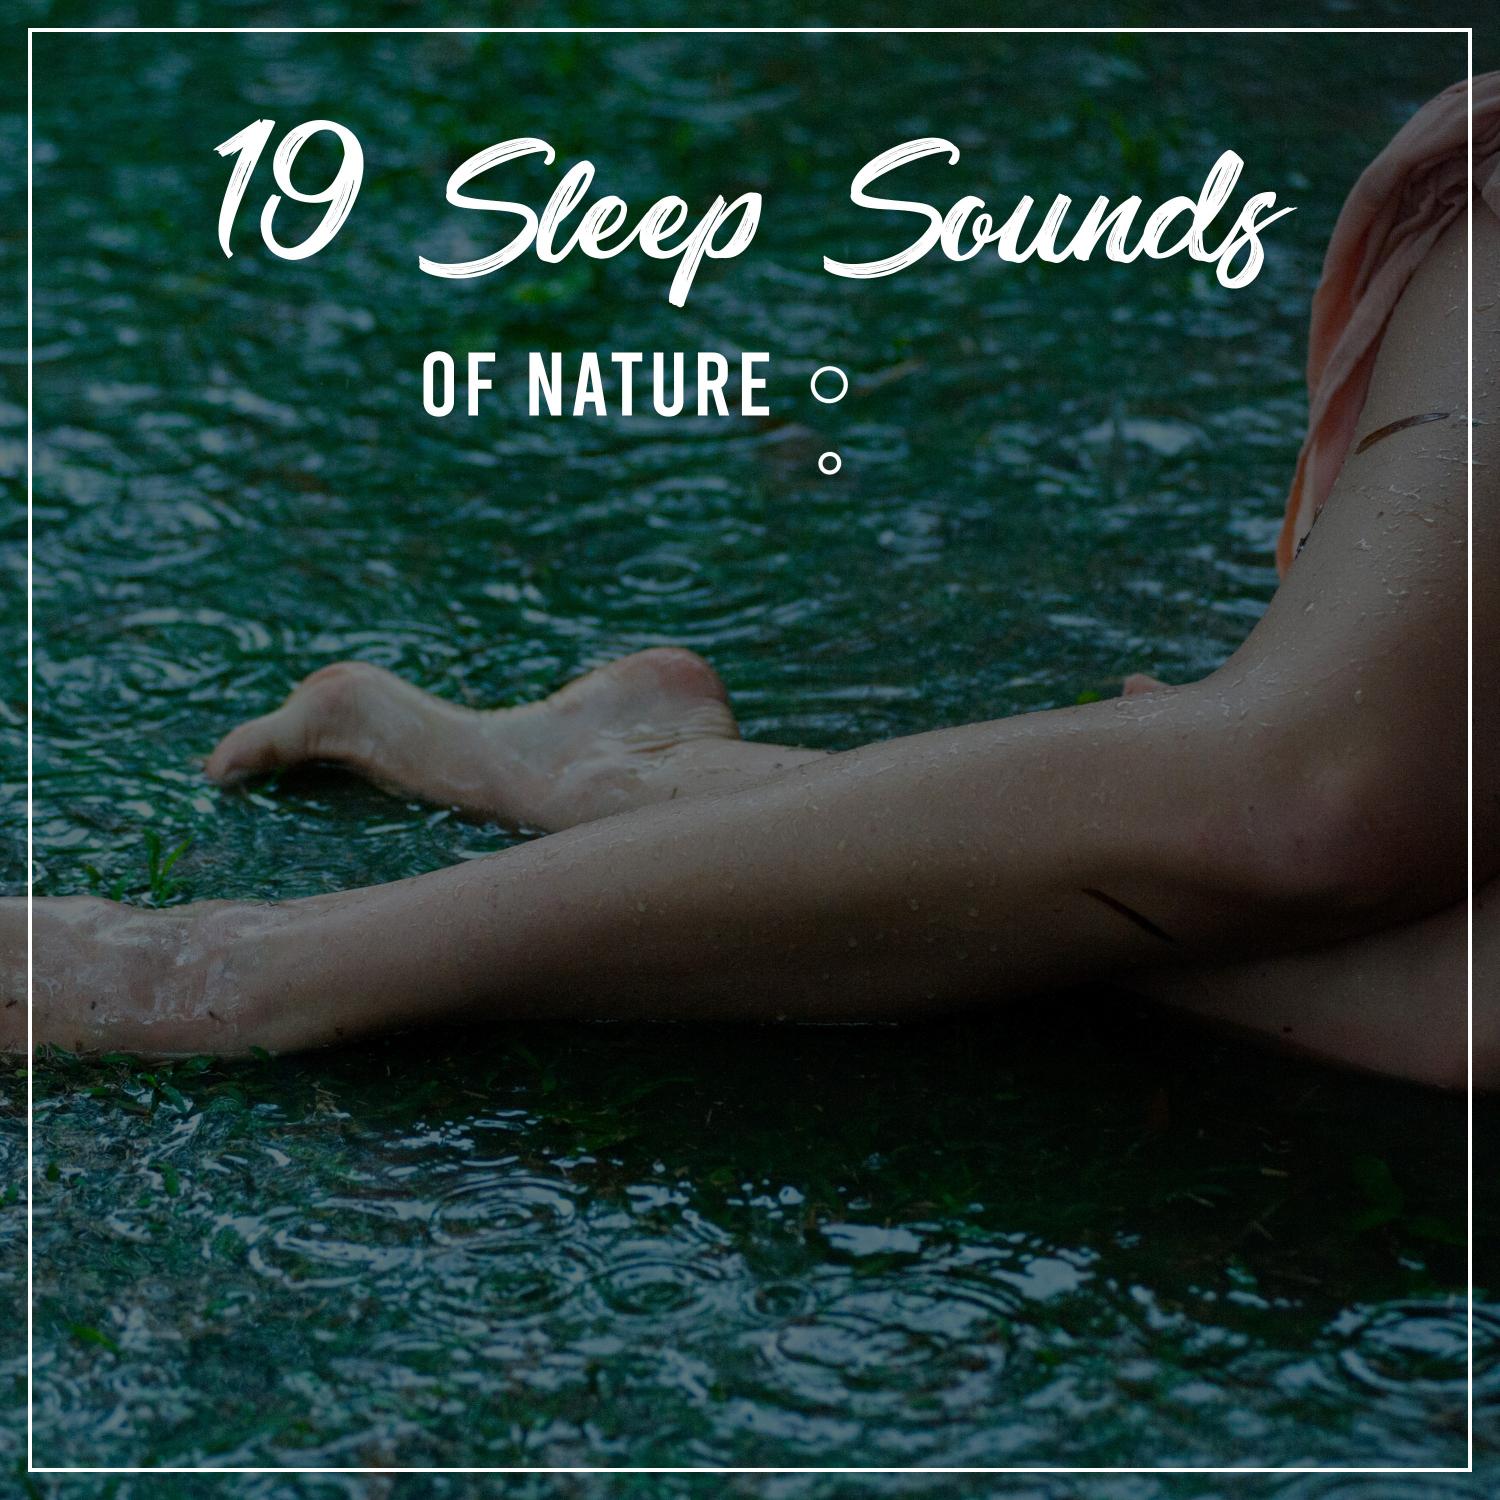 19 Sleep Nature Sounds. Insomnia Cure, Spa & Meditation Music